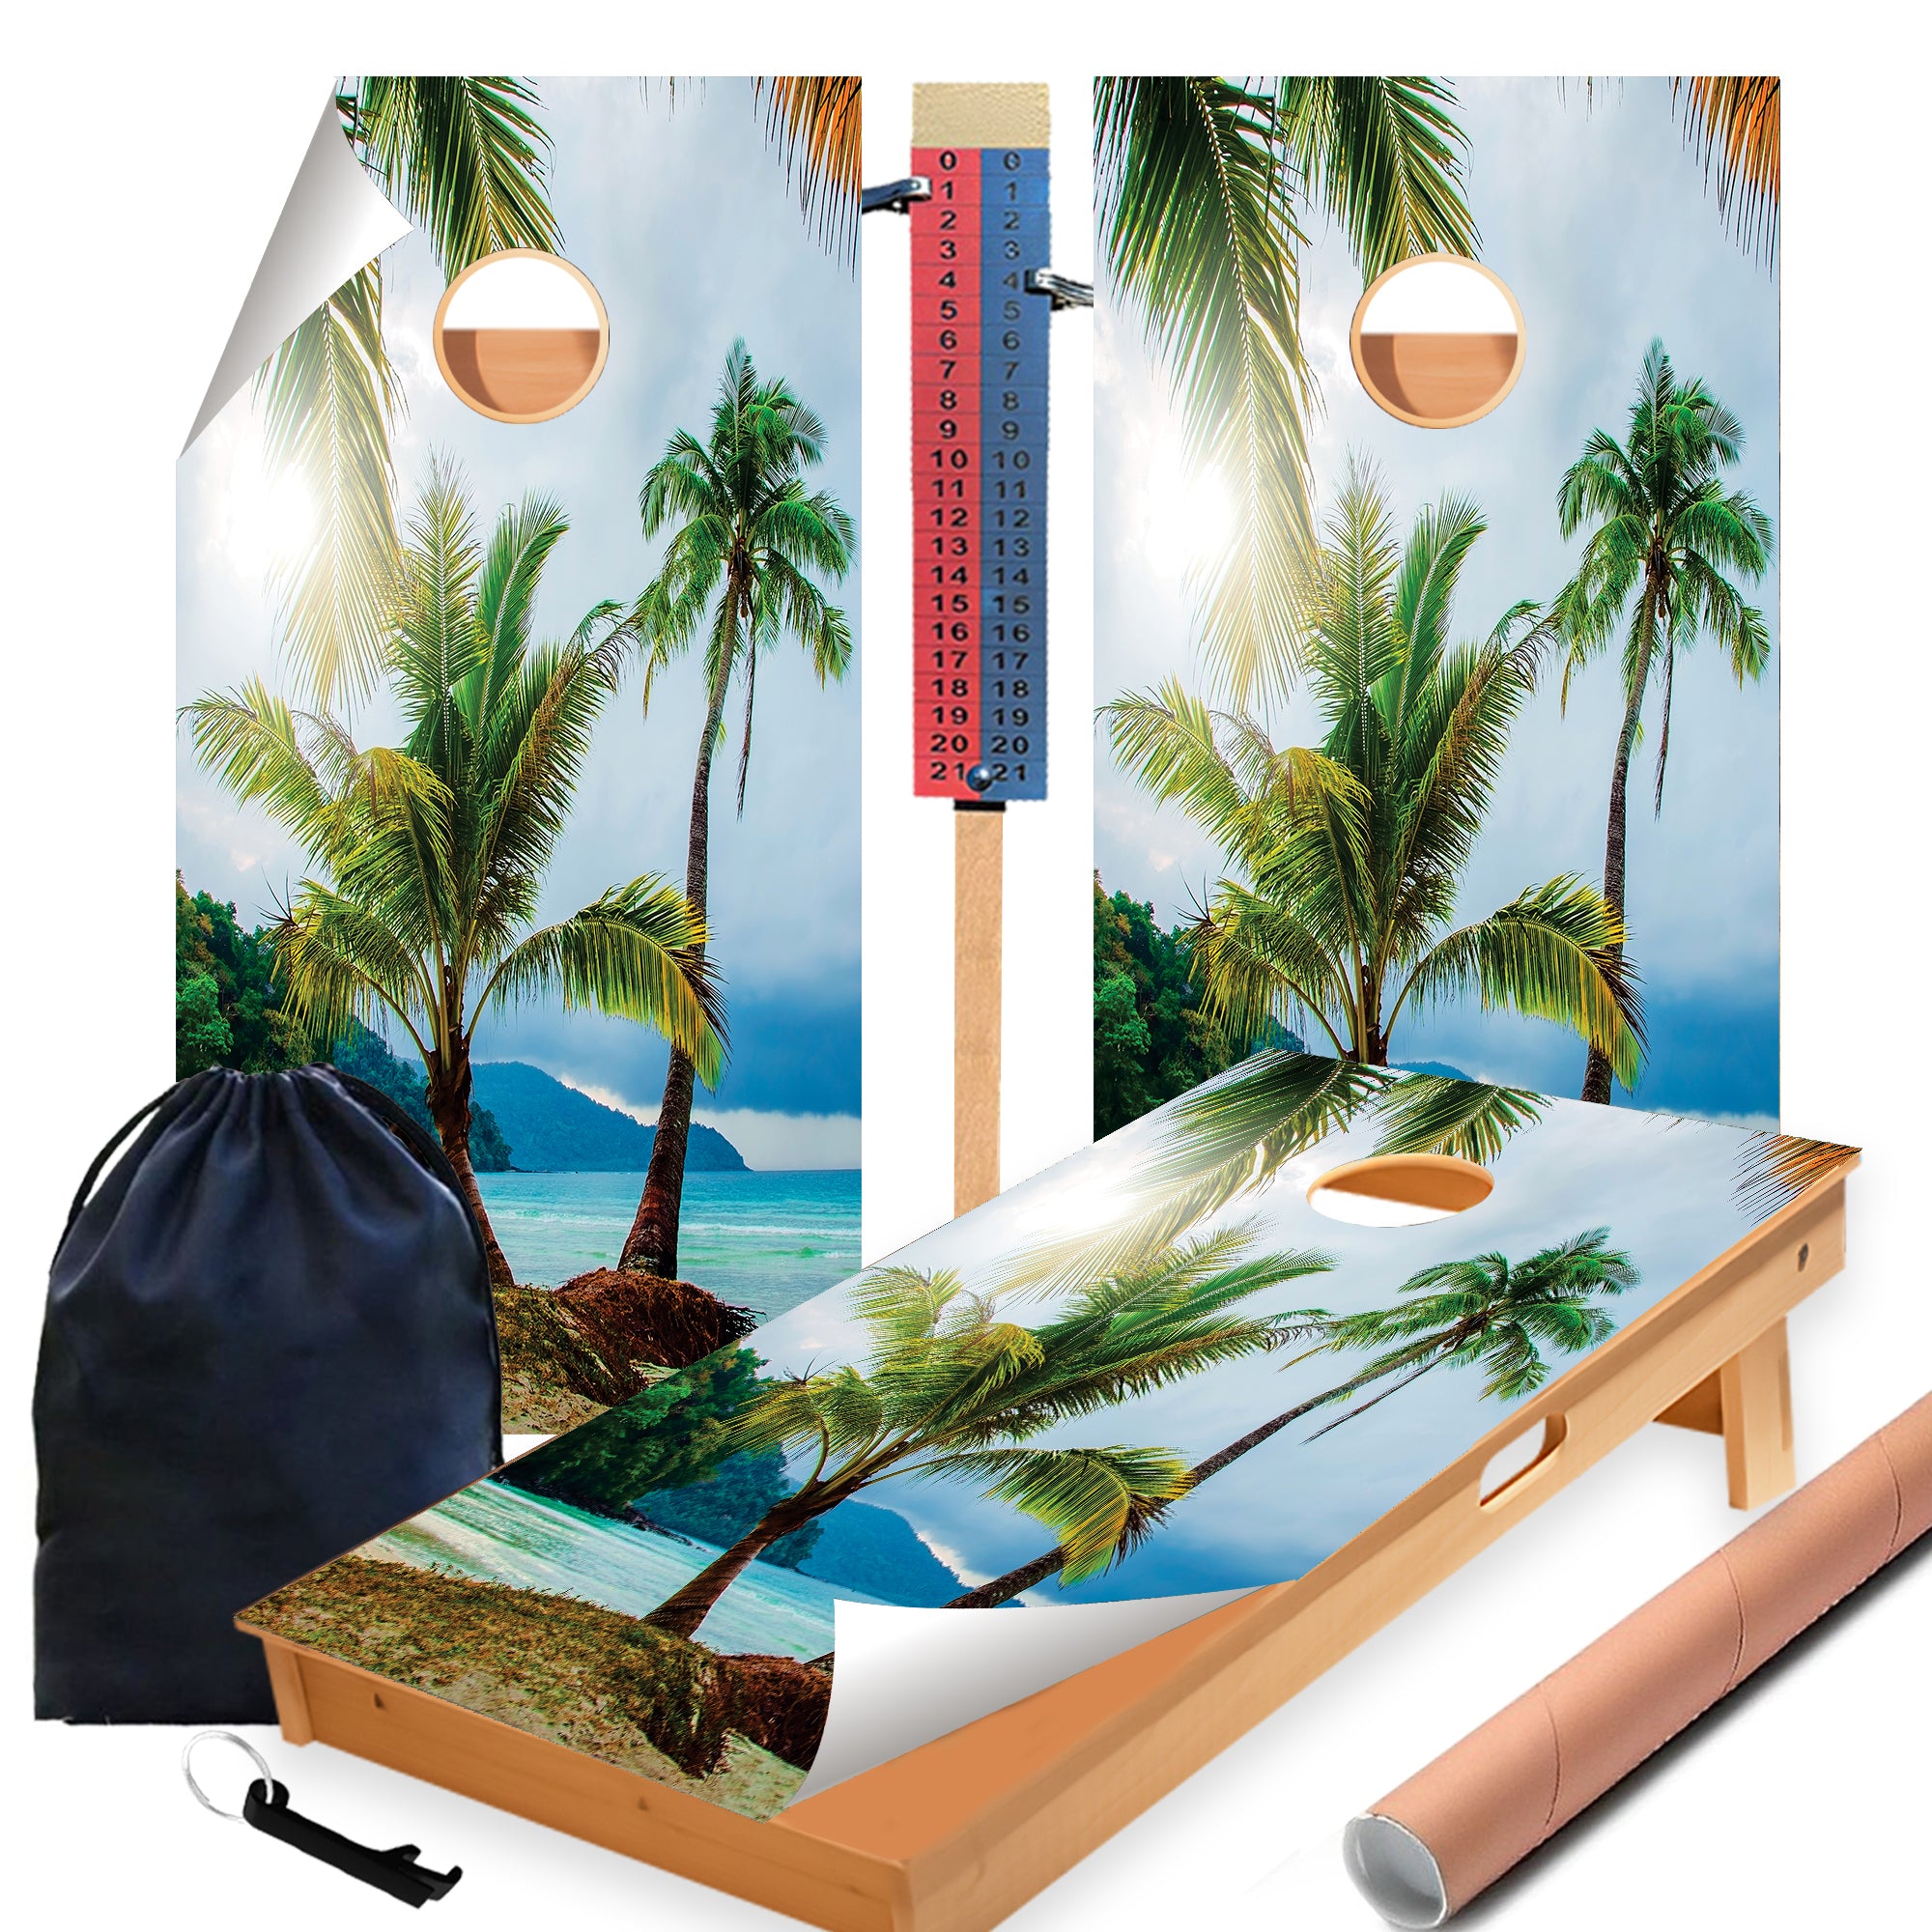 Island Palm Cornhole Boards Wraps (Set of 2)